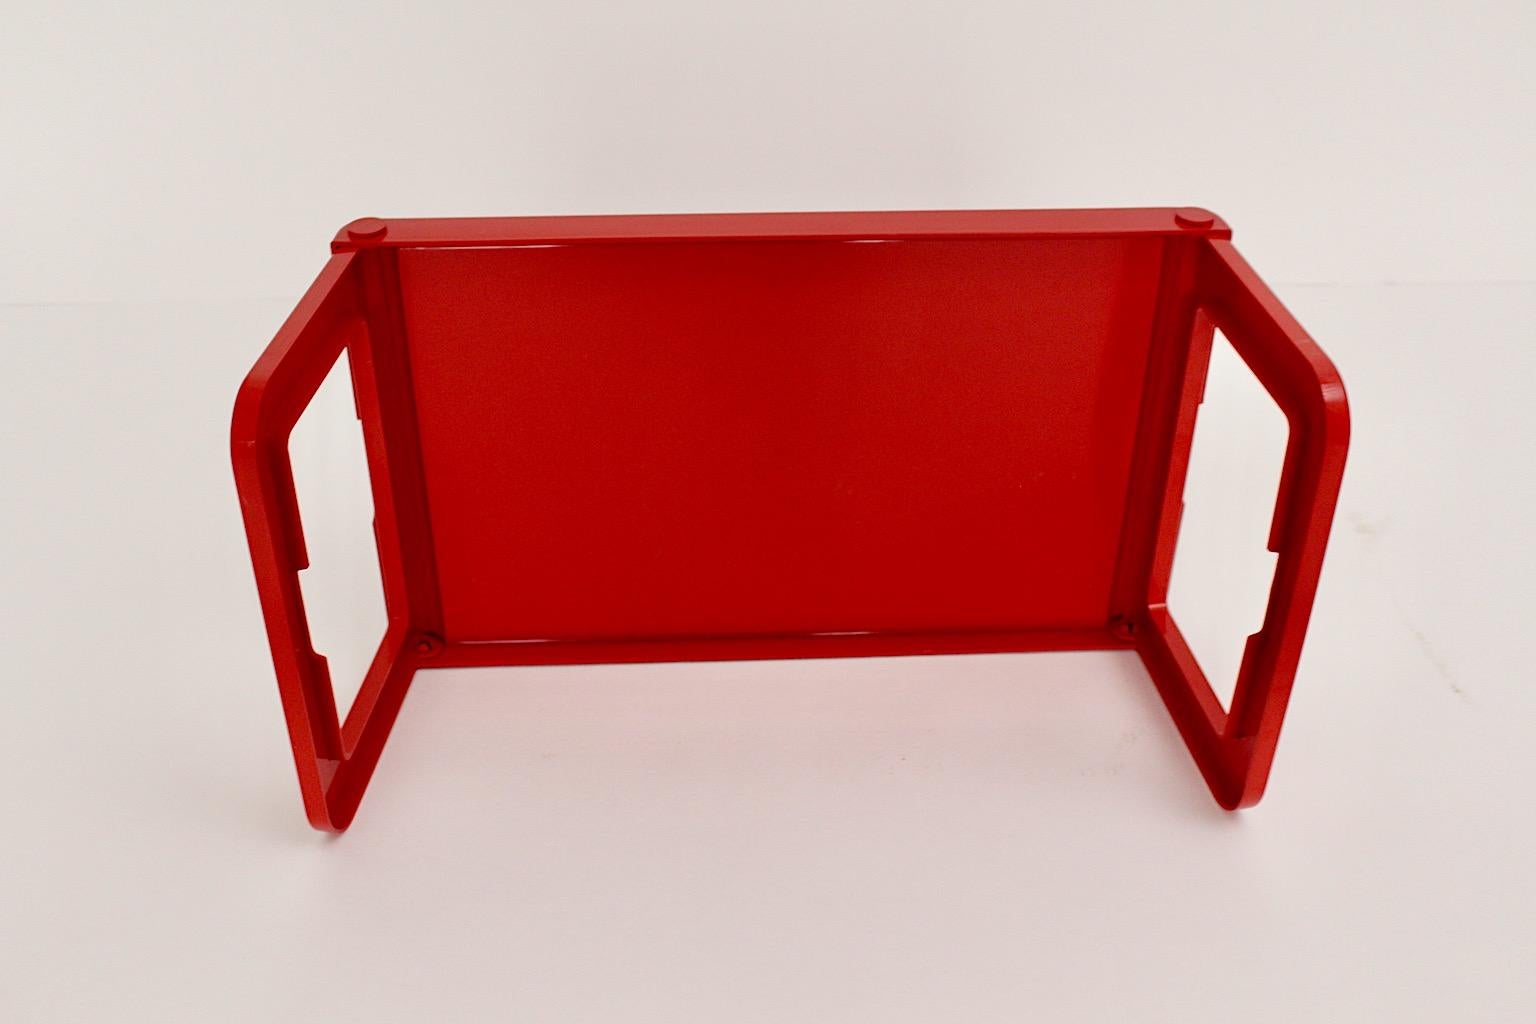 Space Age Red Plastic Tray Table or Gueridon Pepito Luigi Massoni for Guzzini For Sale 3